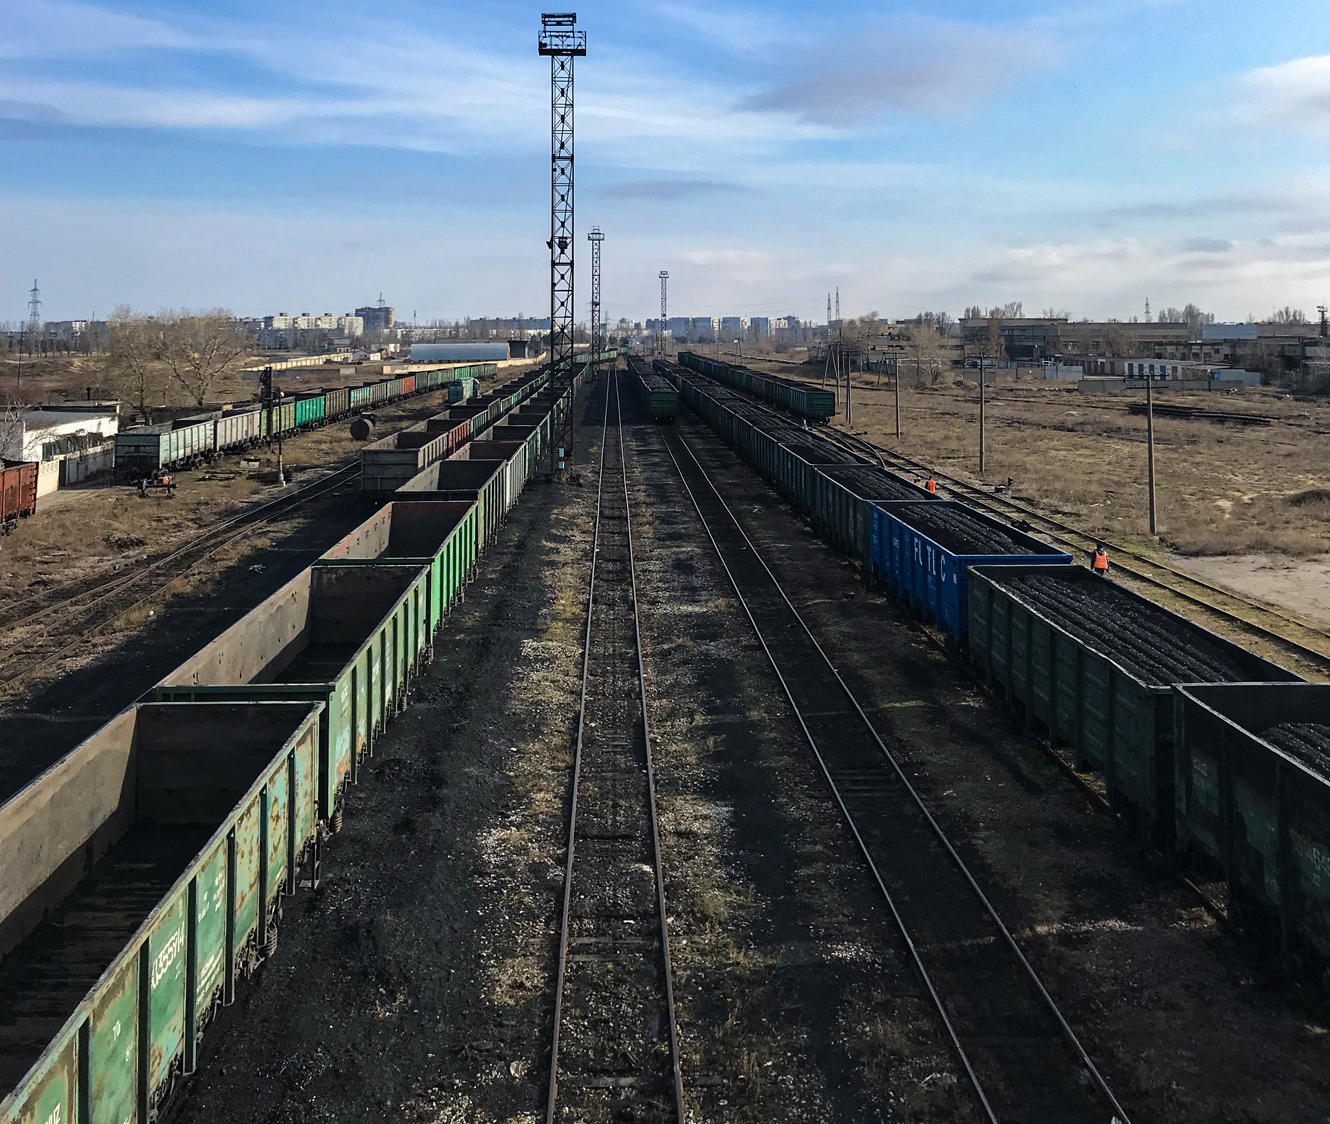 Prydniprovska Railway — Stations & ways